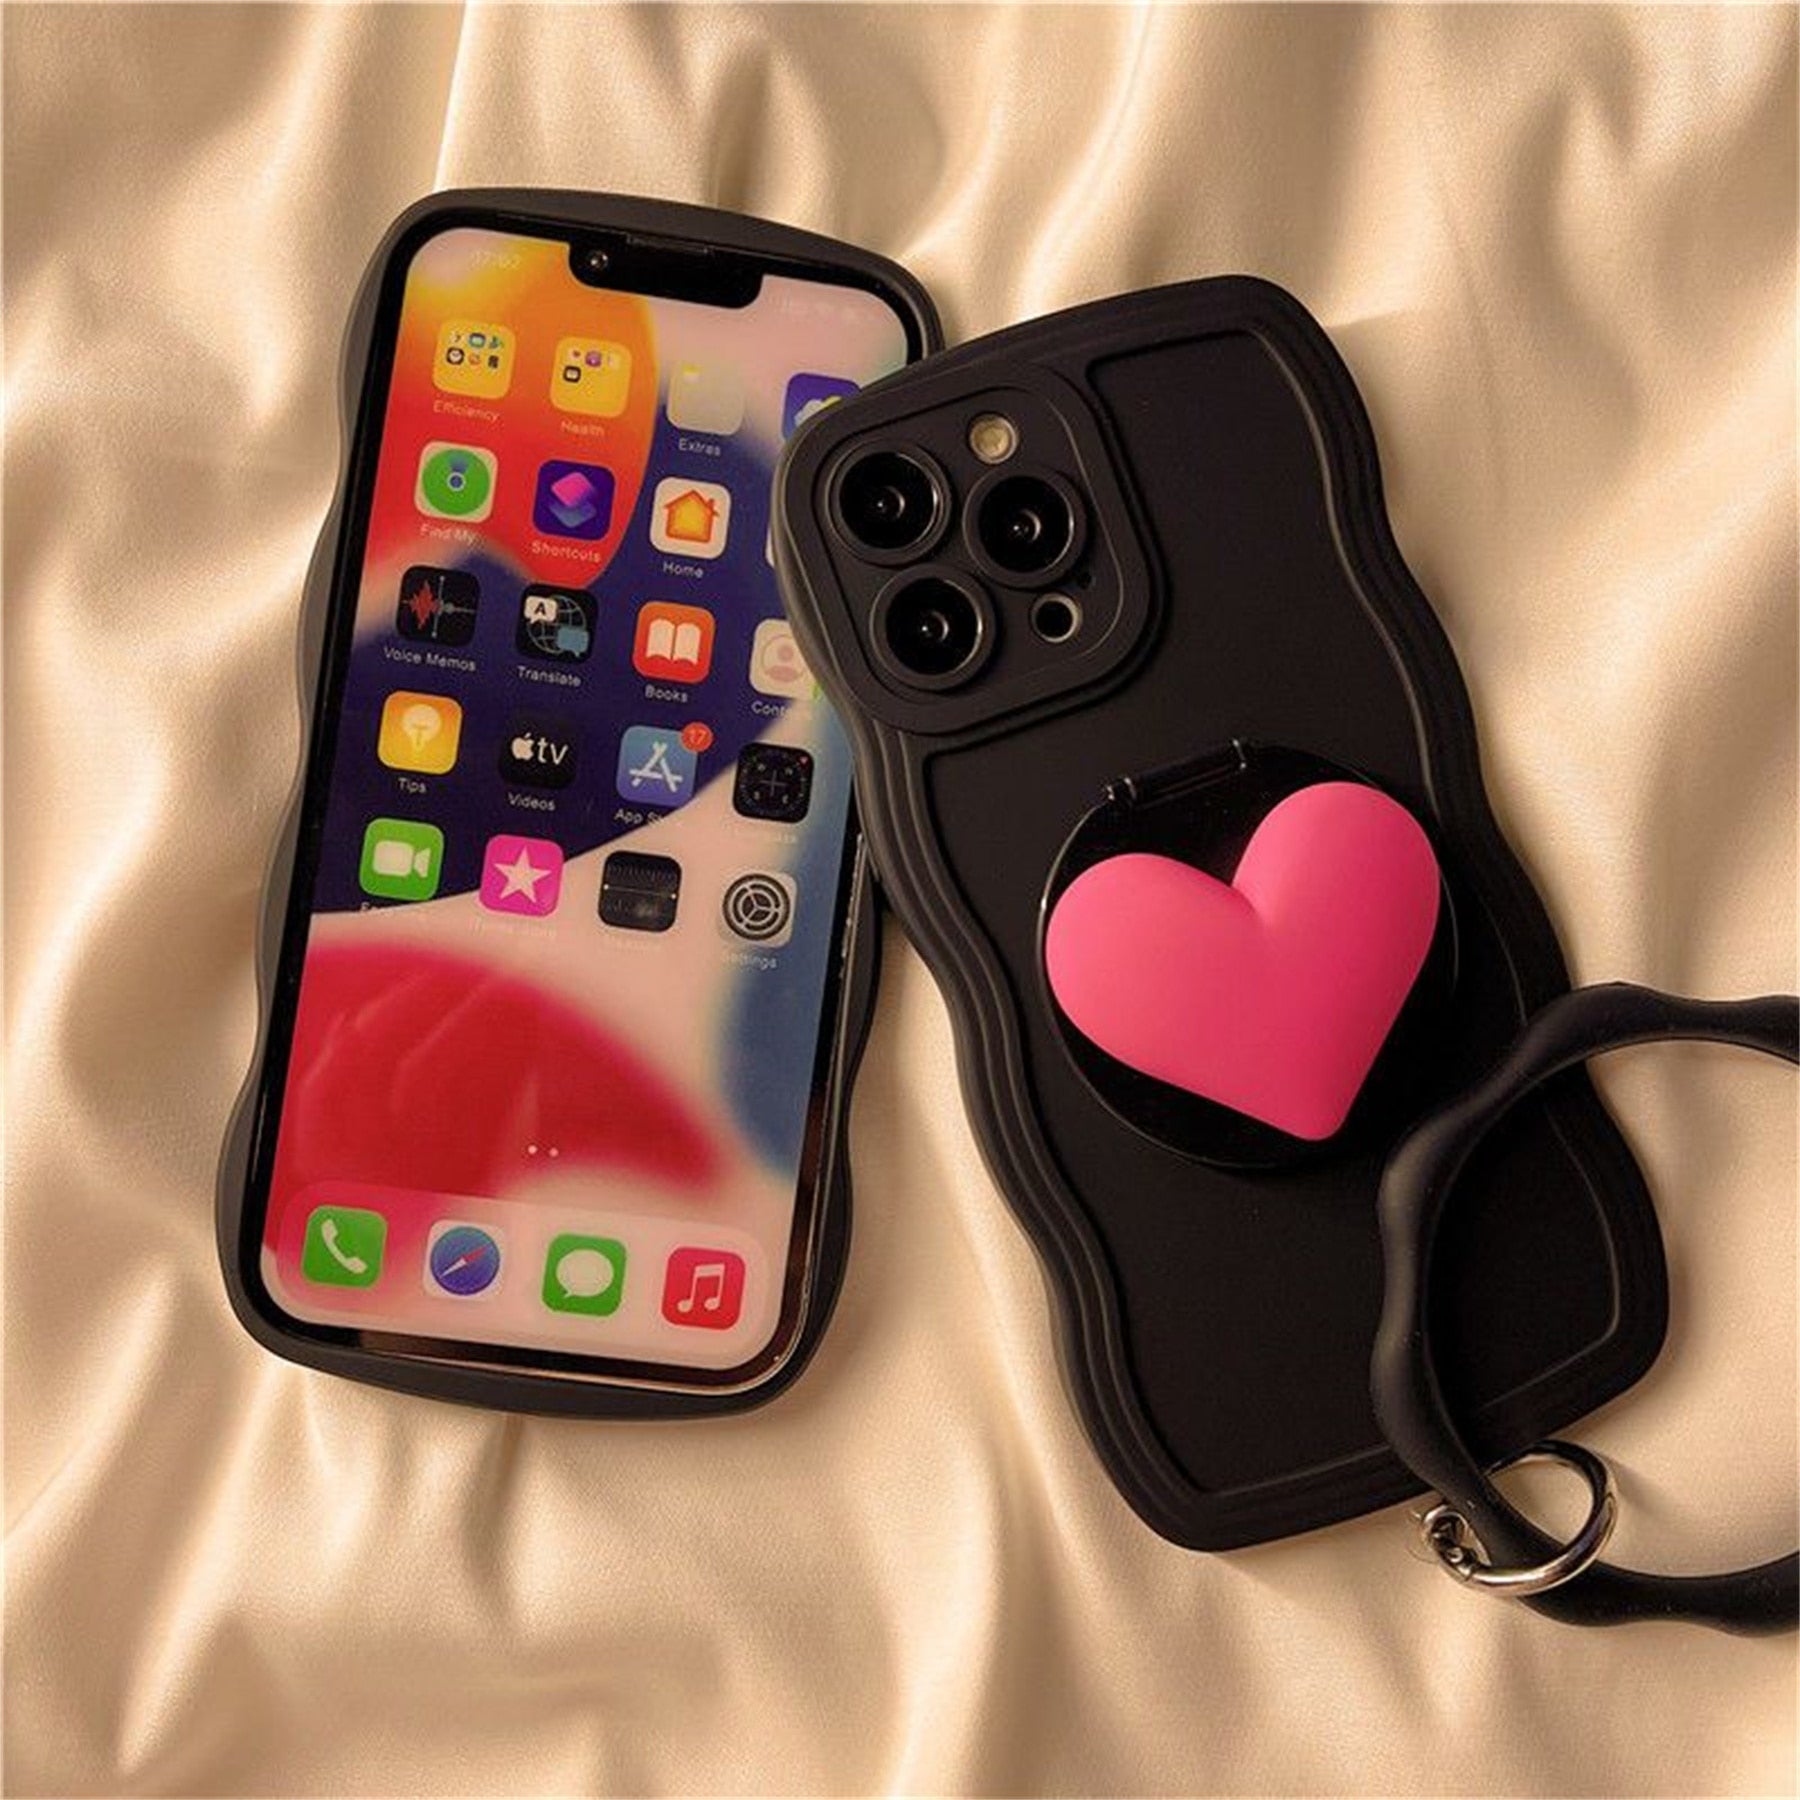 Cute 3D Love Heart Shape Makeup Mirror Wave Edge Black iPhone Phone Soft Cover Case